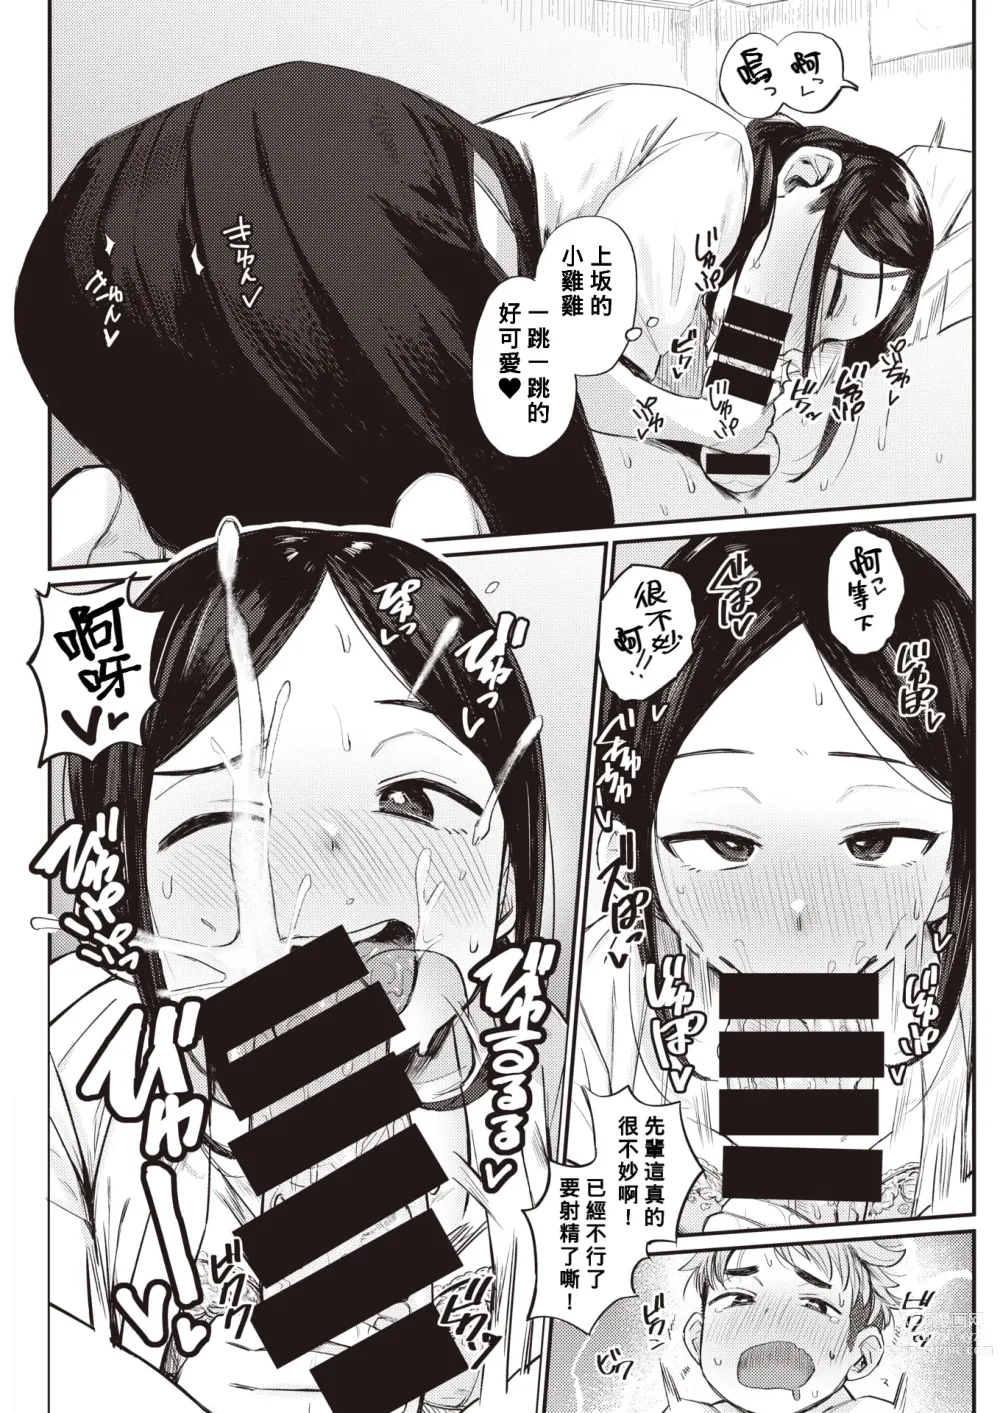 Page 8 of manga Koi no Nioi♡